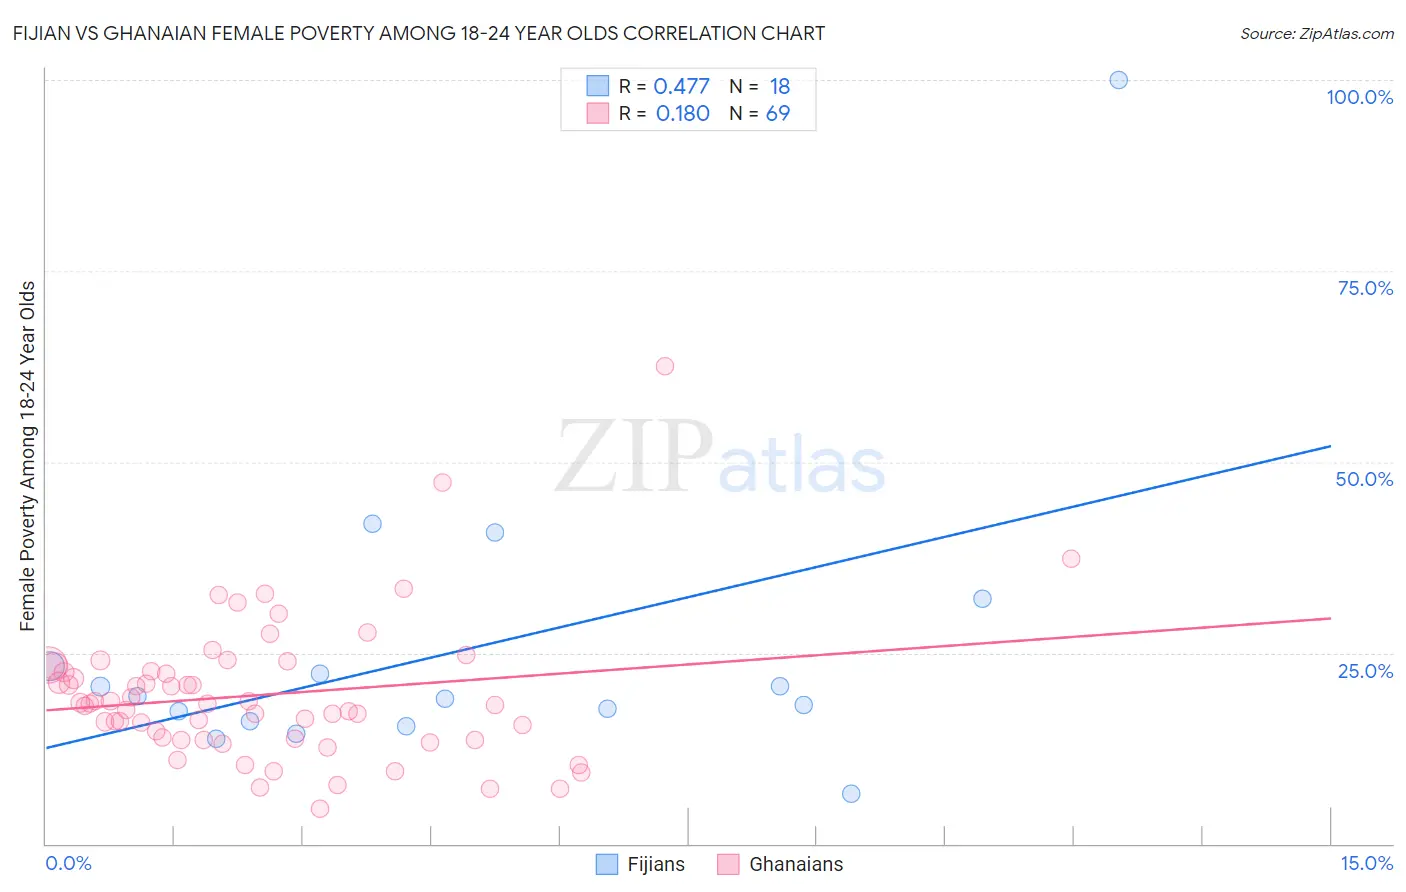 Fijian vs Ghanaian Female Poverty Among 18-24 Year Olds